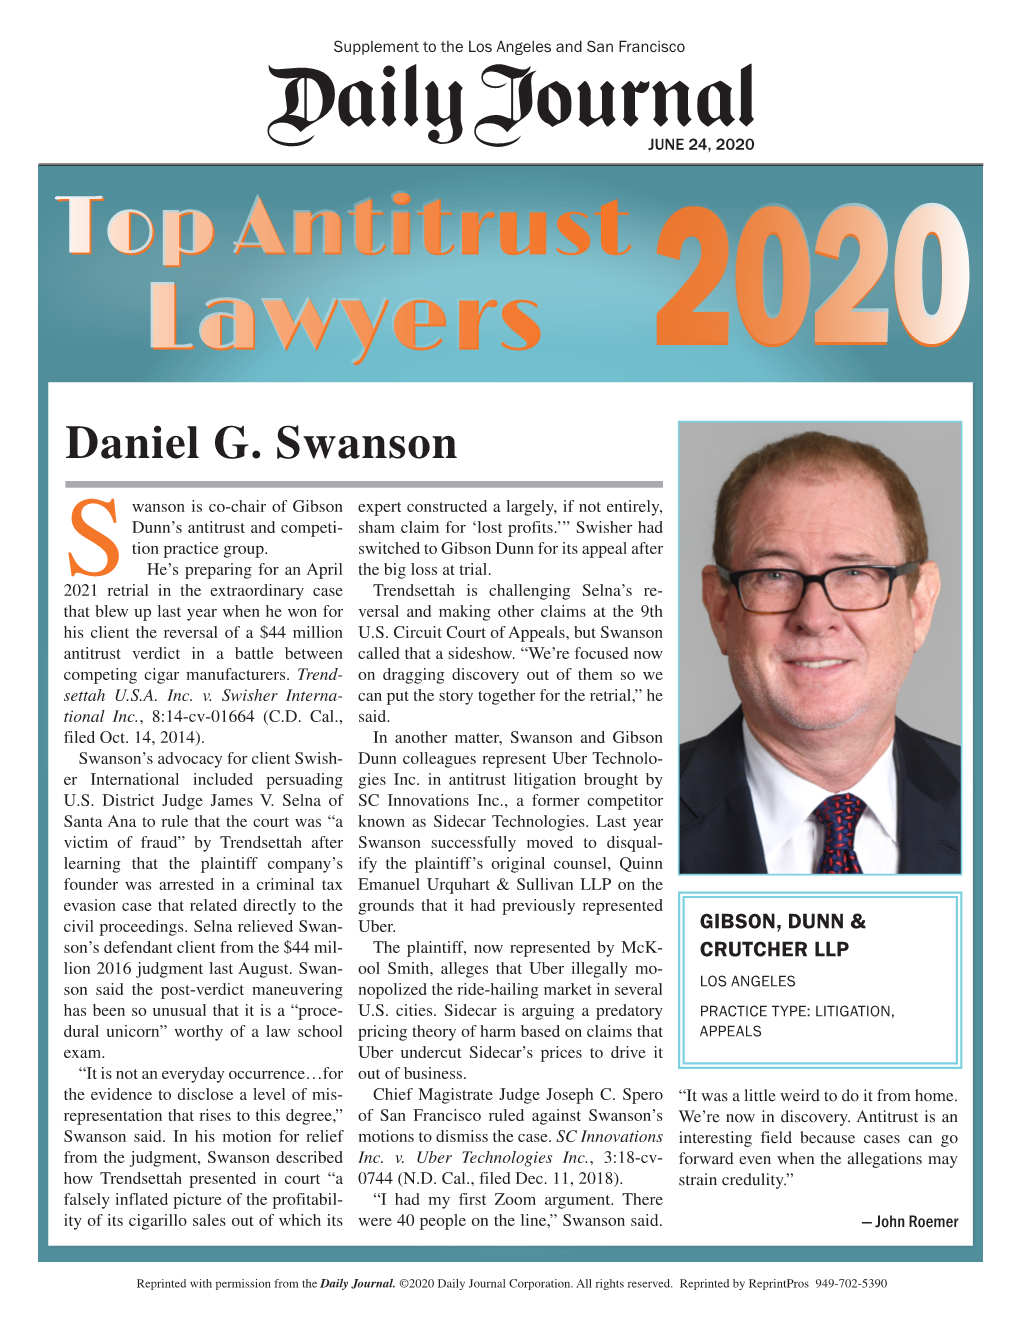 Top Antitrust Lawyers-Supplement